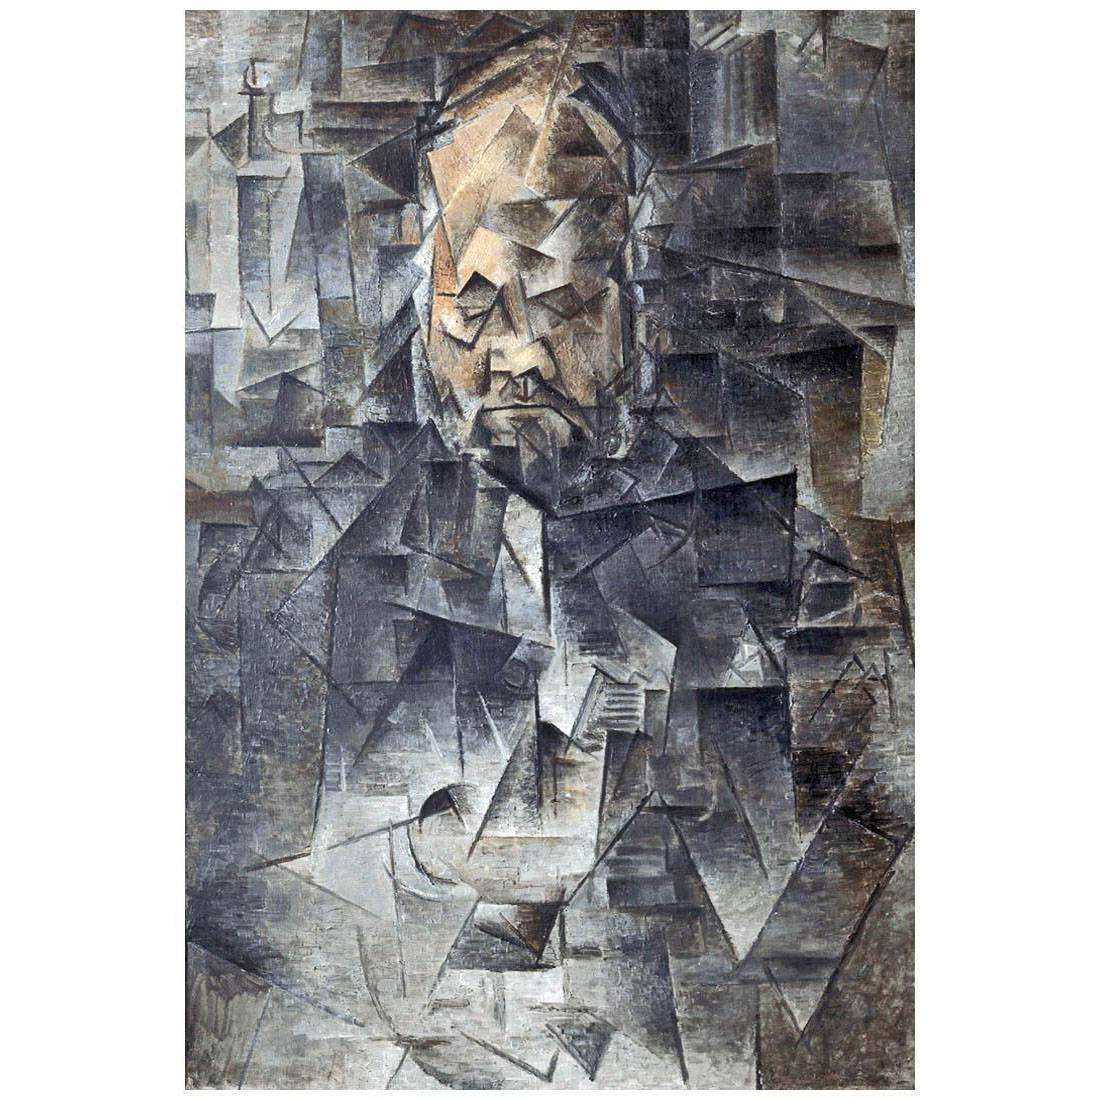 Pablo Picasso. Portrait de Ambroise Vollard. 1910. Musee Pouchkine, Moscou